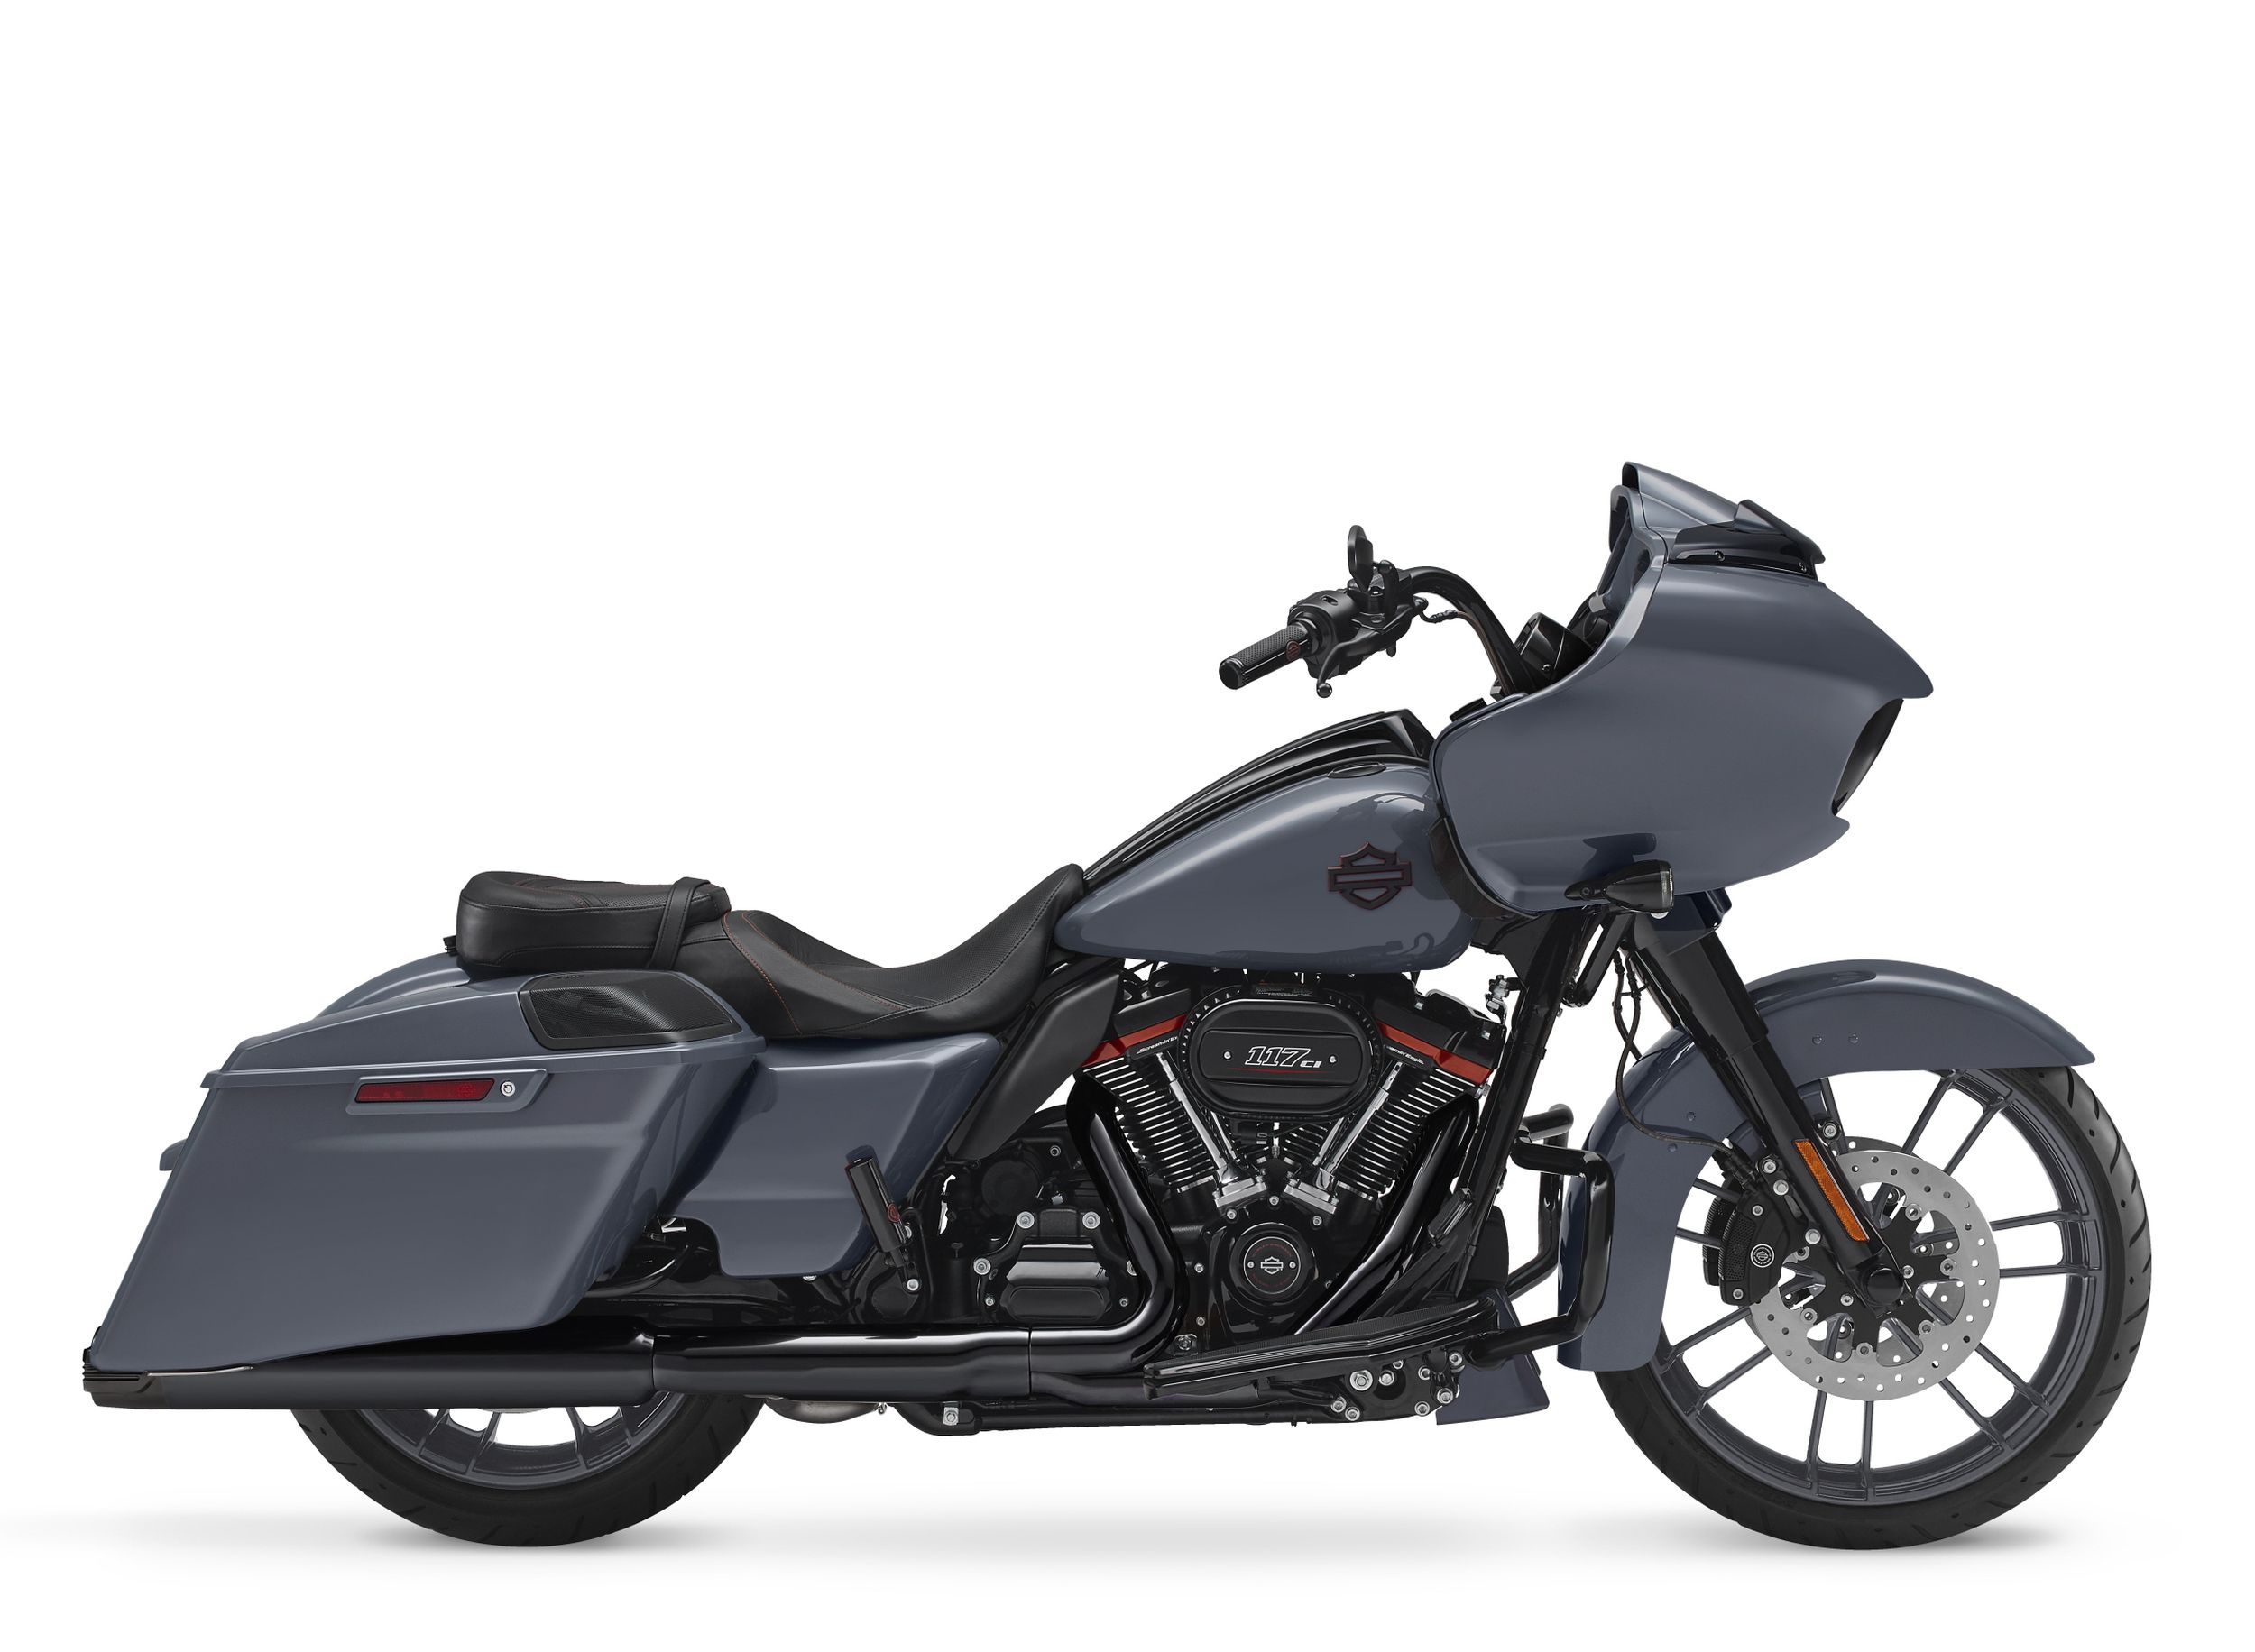 Motorrad Vergleich Harley Davidson Cvo Road Glide Fltrse 2018 Vs Harley Davidson Street Glide Flhx 2020